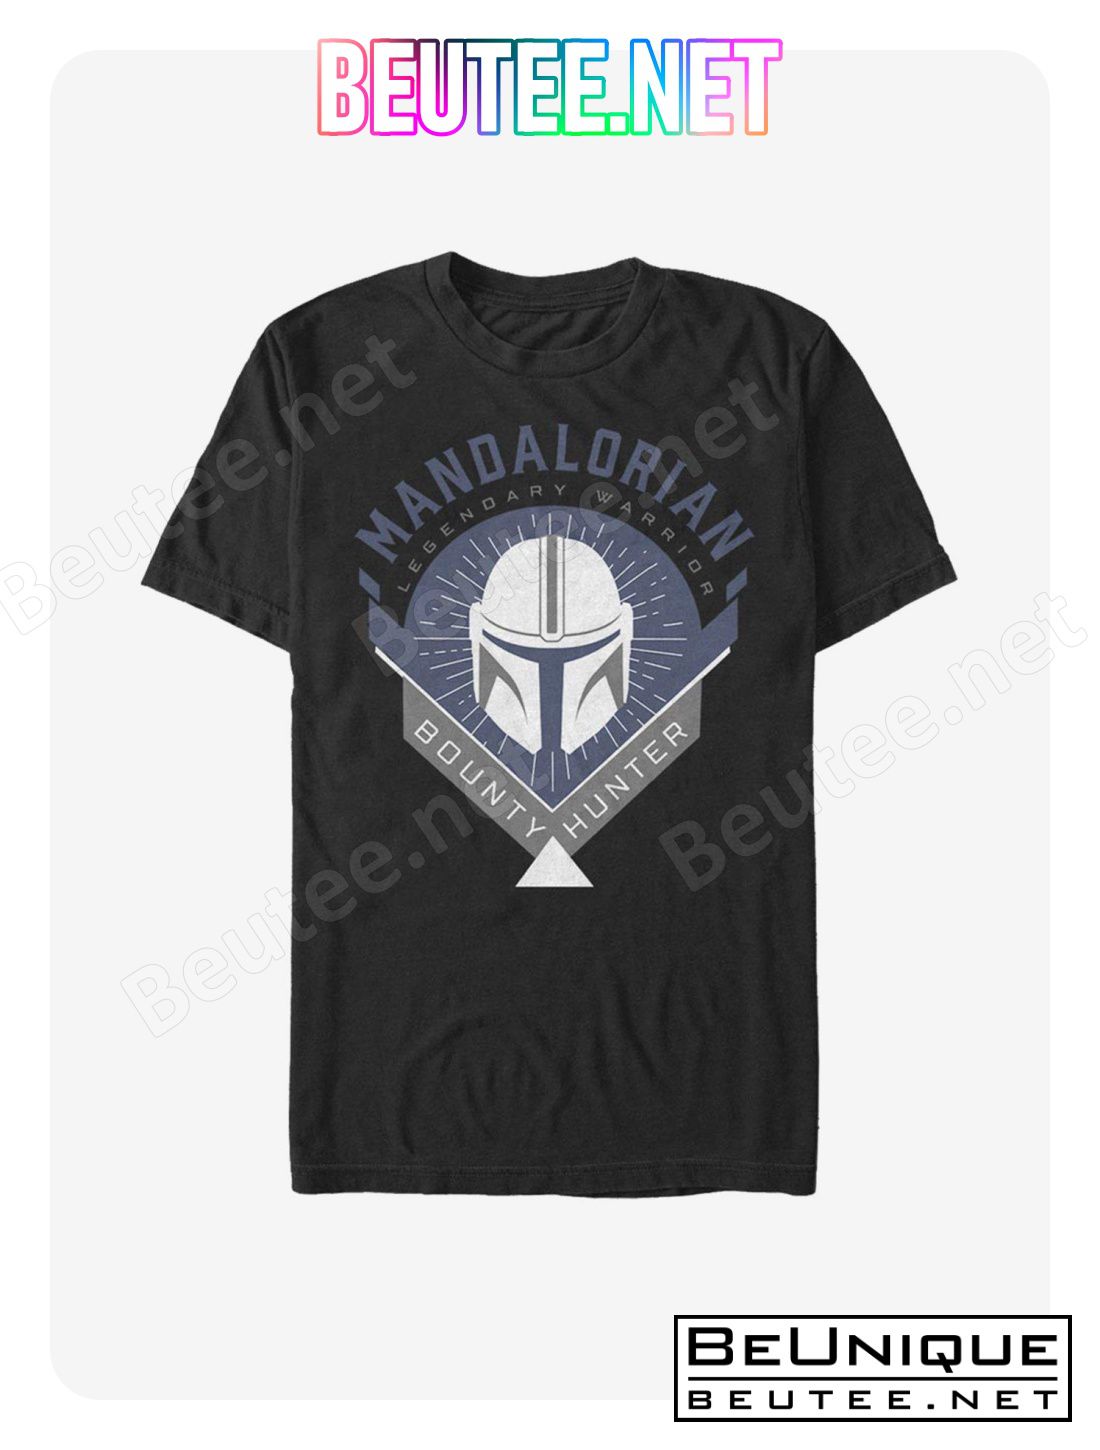 Extra Soft Star Wars The Mandalorian Crest T-Shirt